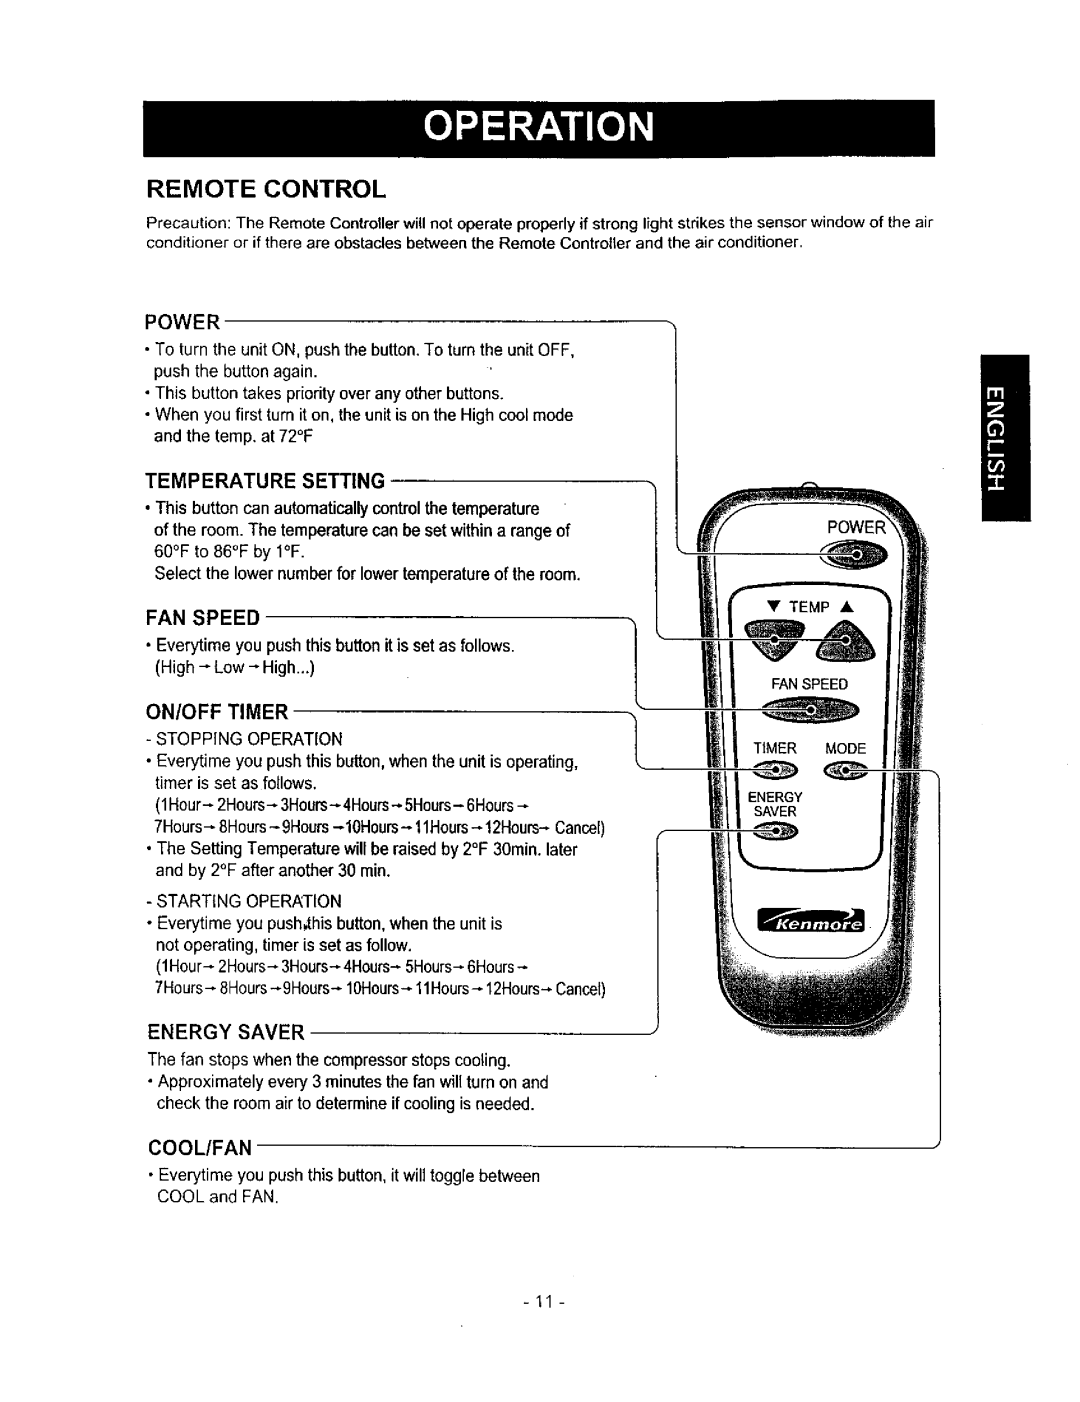 Kenmore 580.71056 owner manual Remote Control 